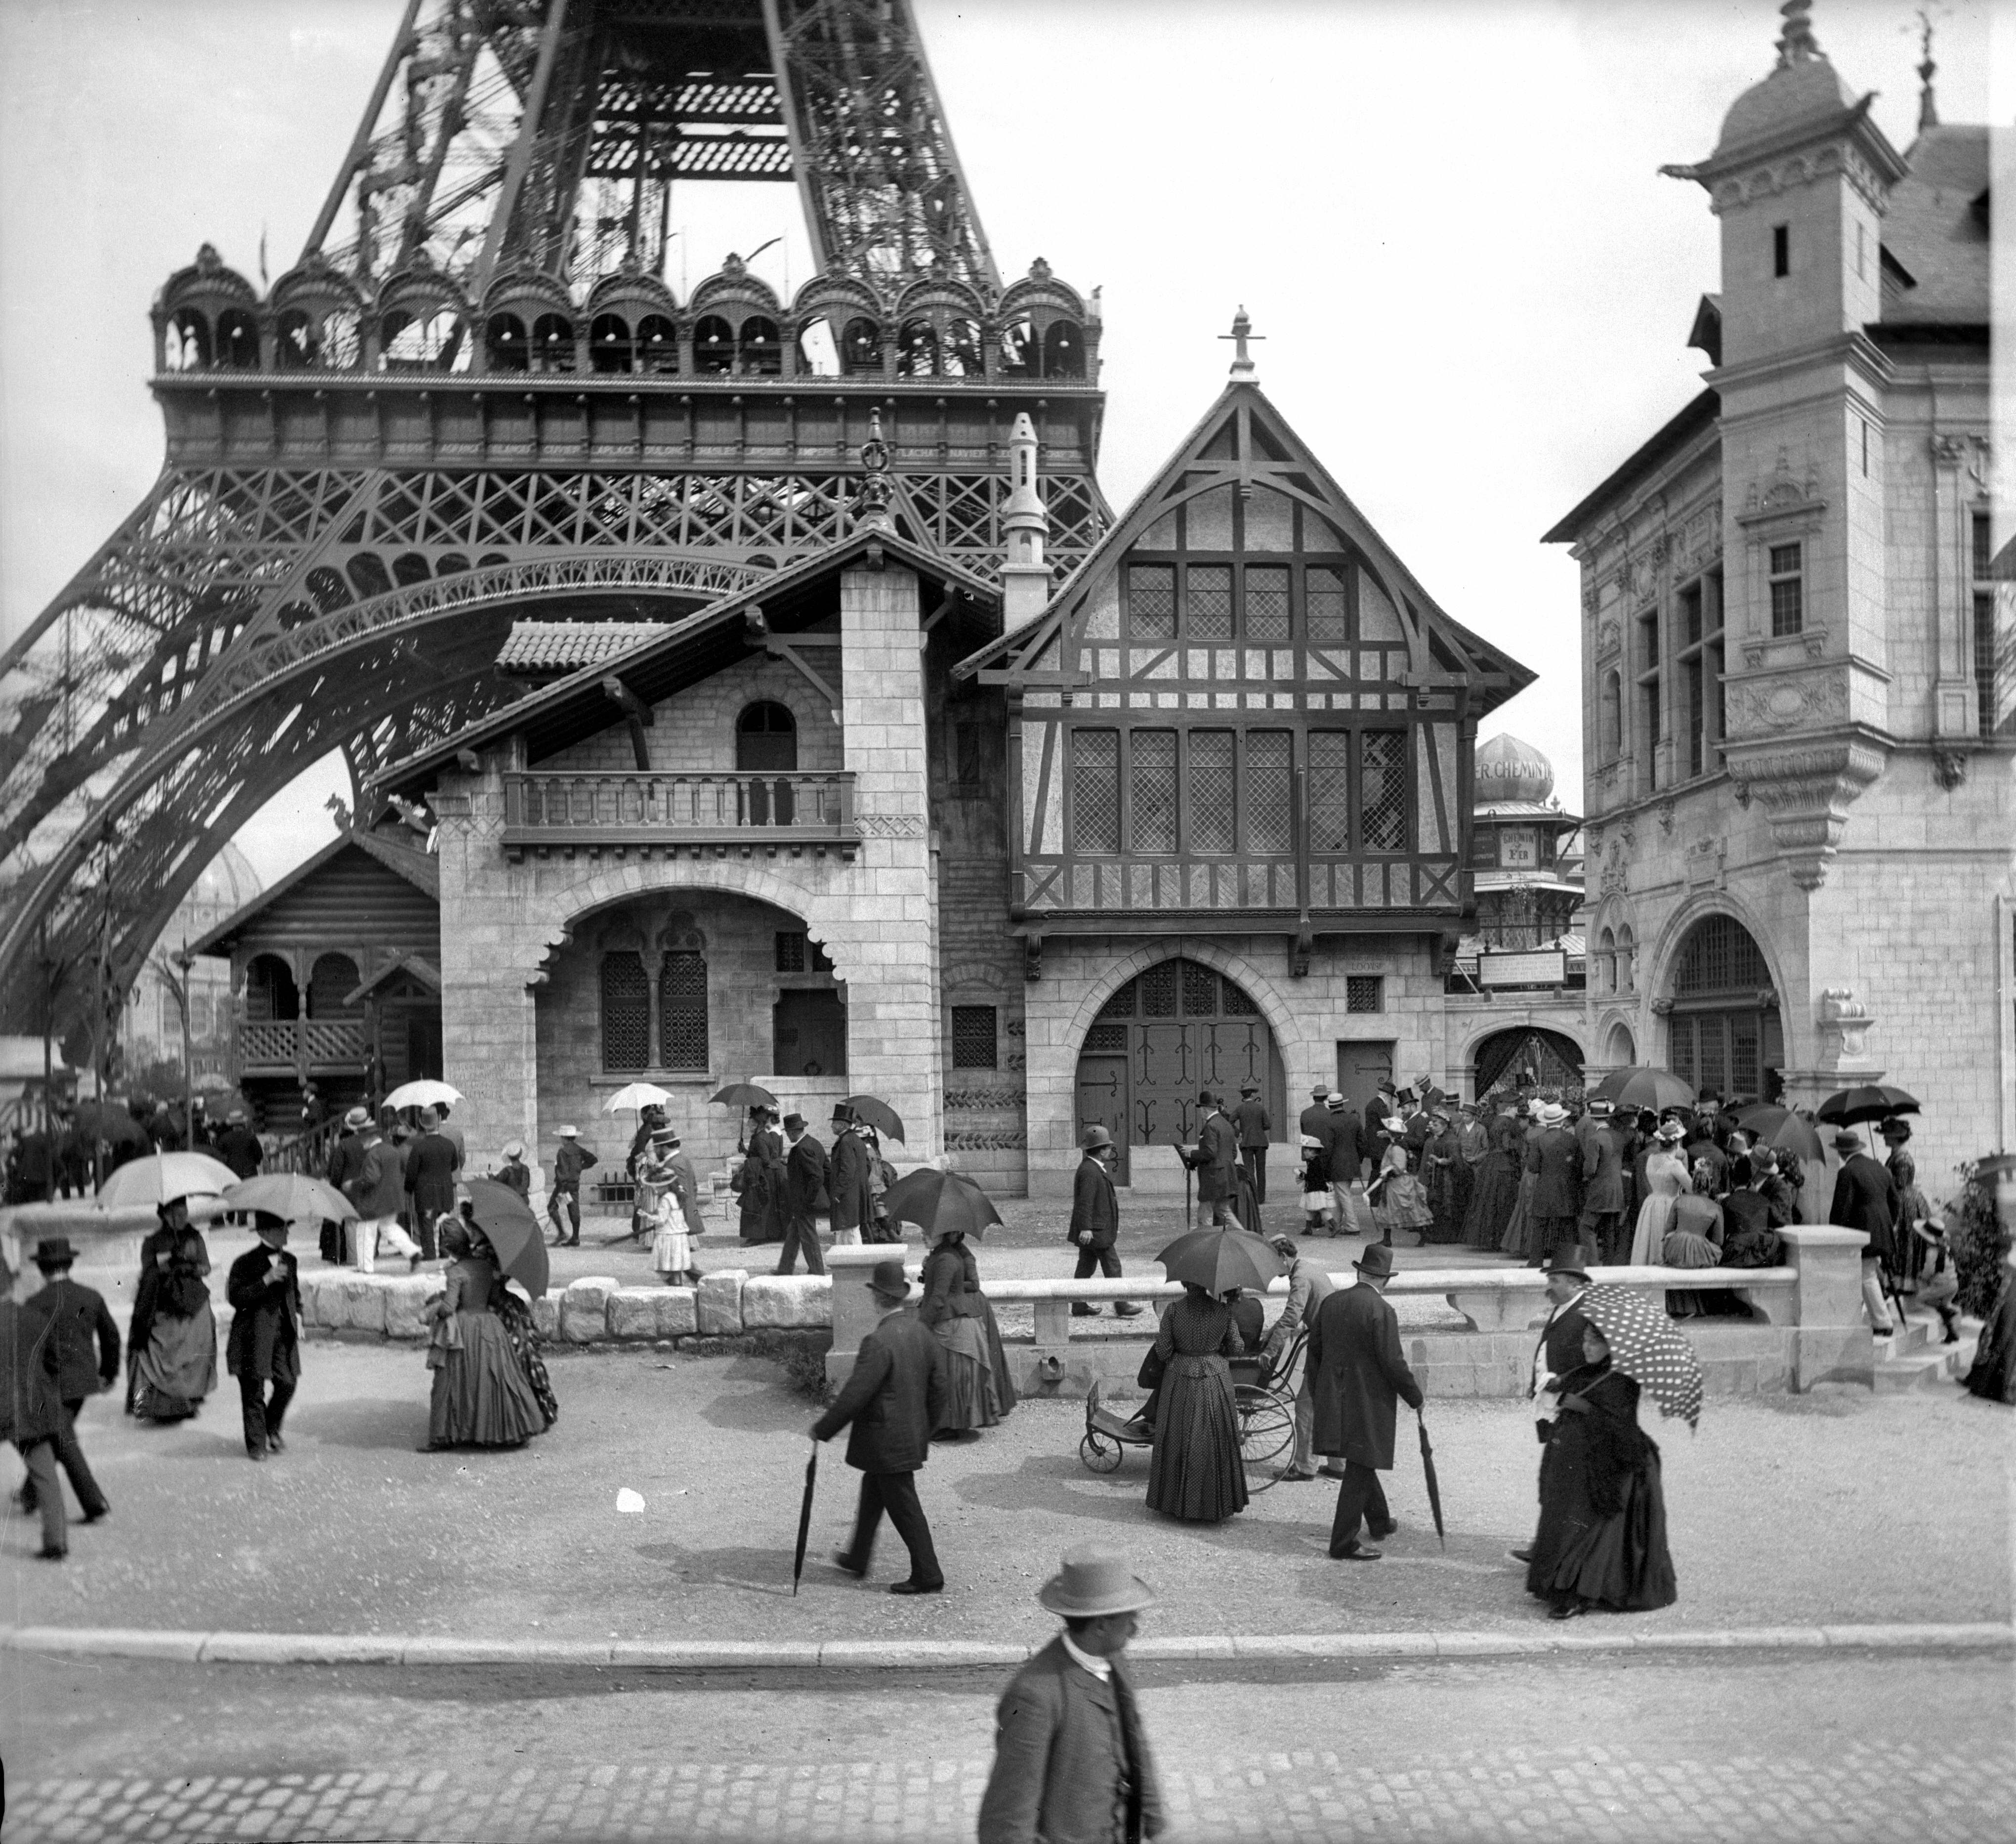 Photography Monochrome Old Photos Vintage Eiffel Tower Paris France Old Building House People Crowds 4080x3731